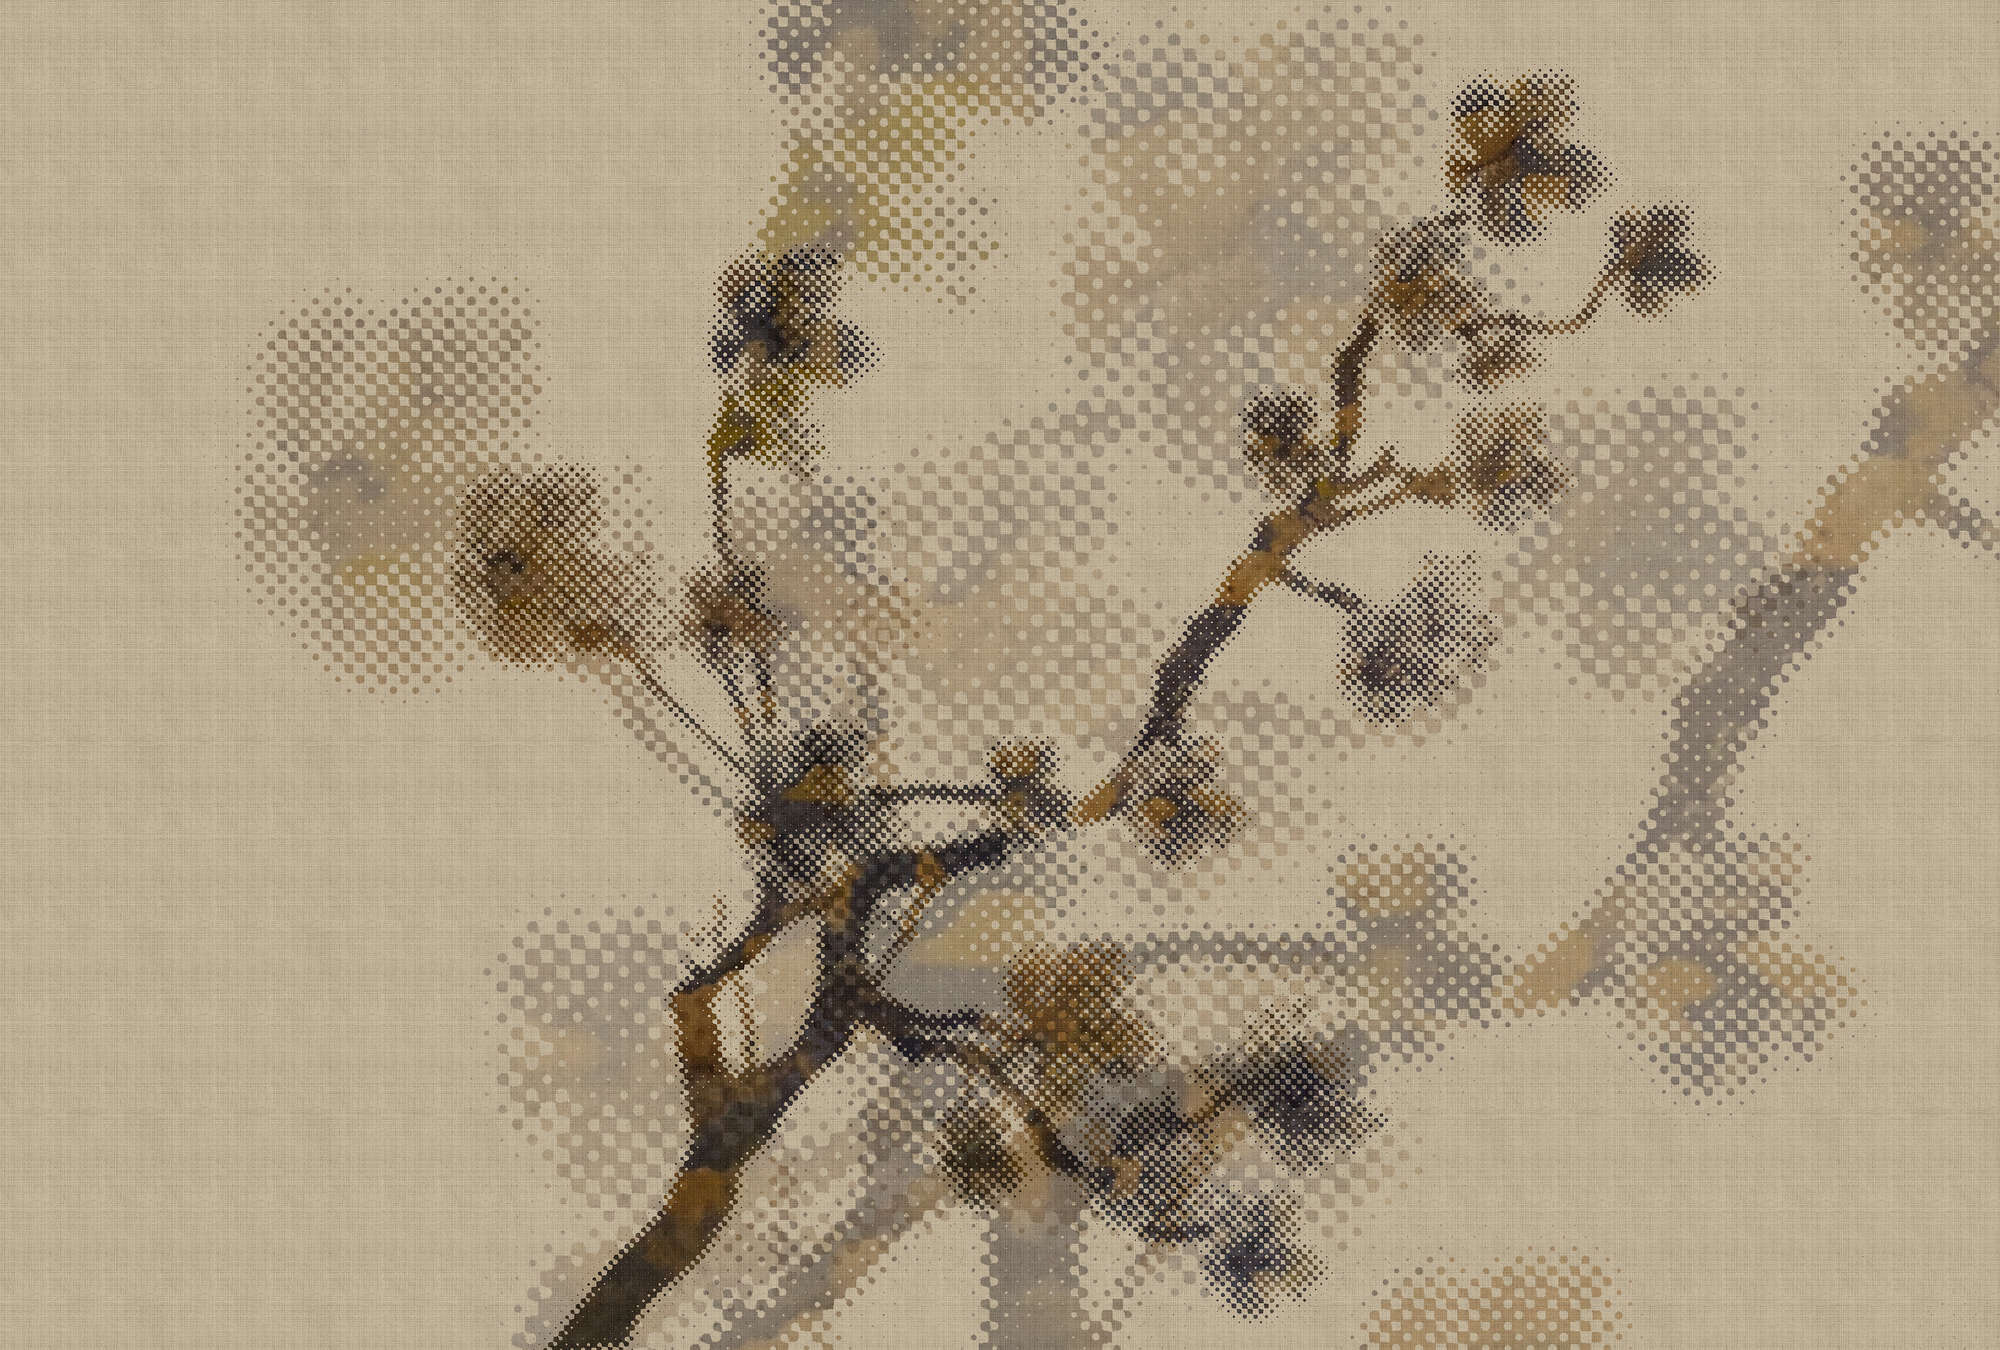             Ramitas 2 - Papel pintado fotomural en estructura de lino natural con motivo de ramas y diseño pixelado - Beige | Liso mate
        